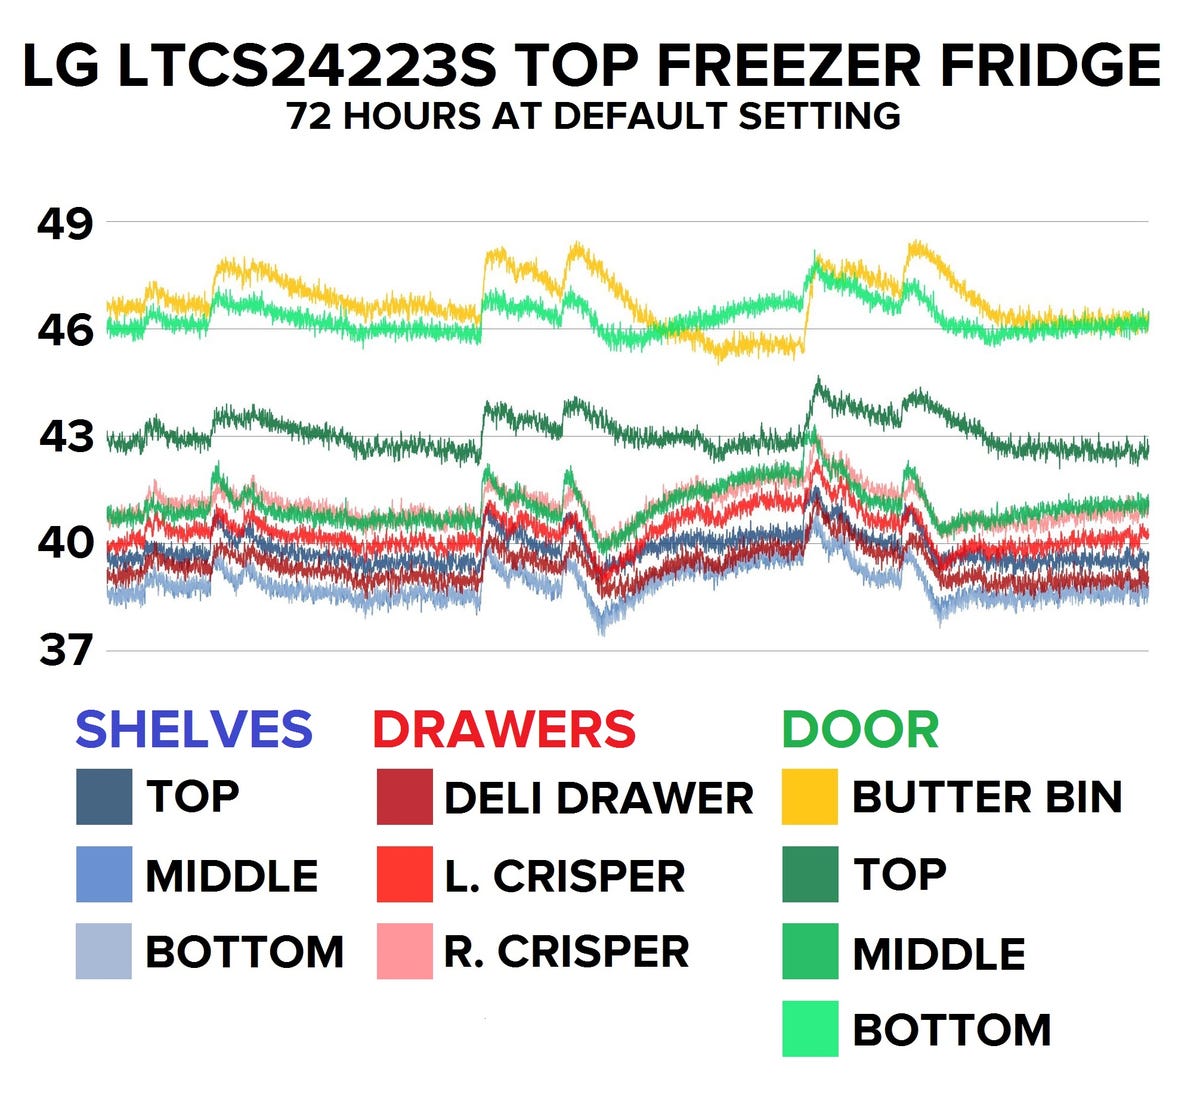 lg-ltcs24223s-top-freezer-refrigerator-default-setting-temp-graph.jpg